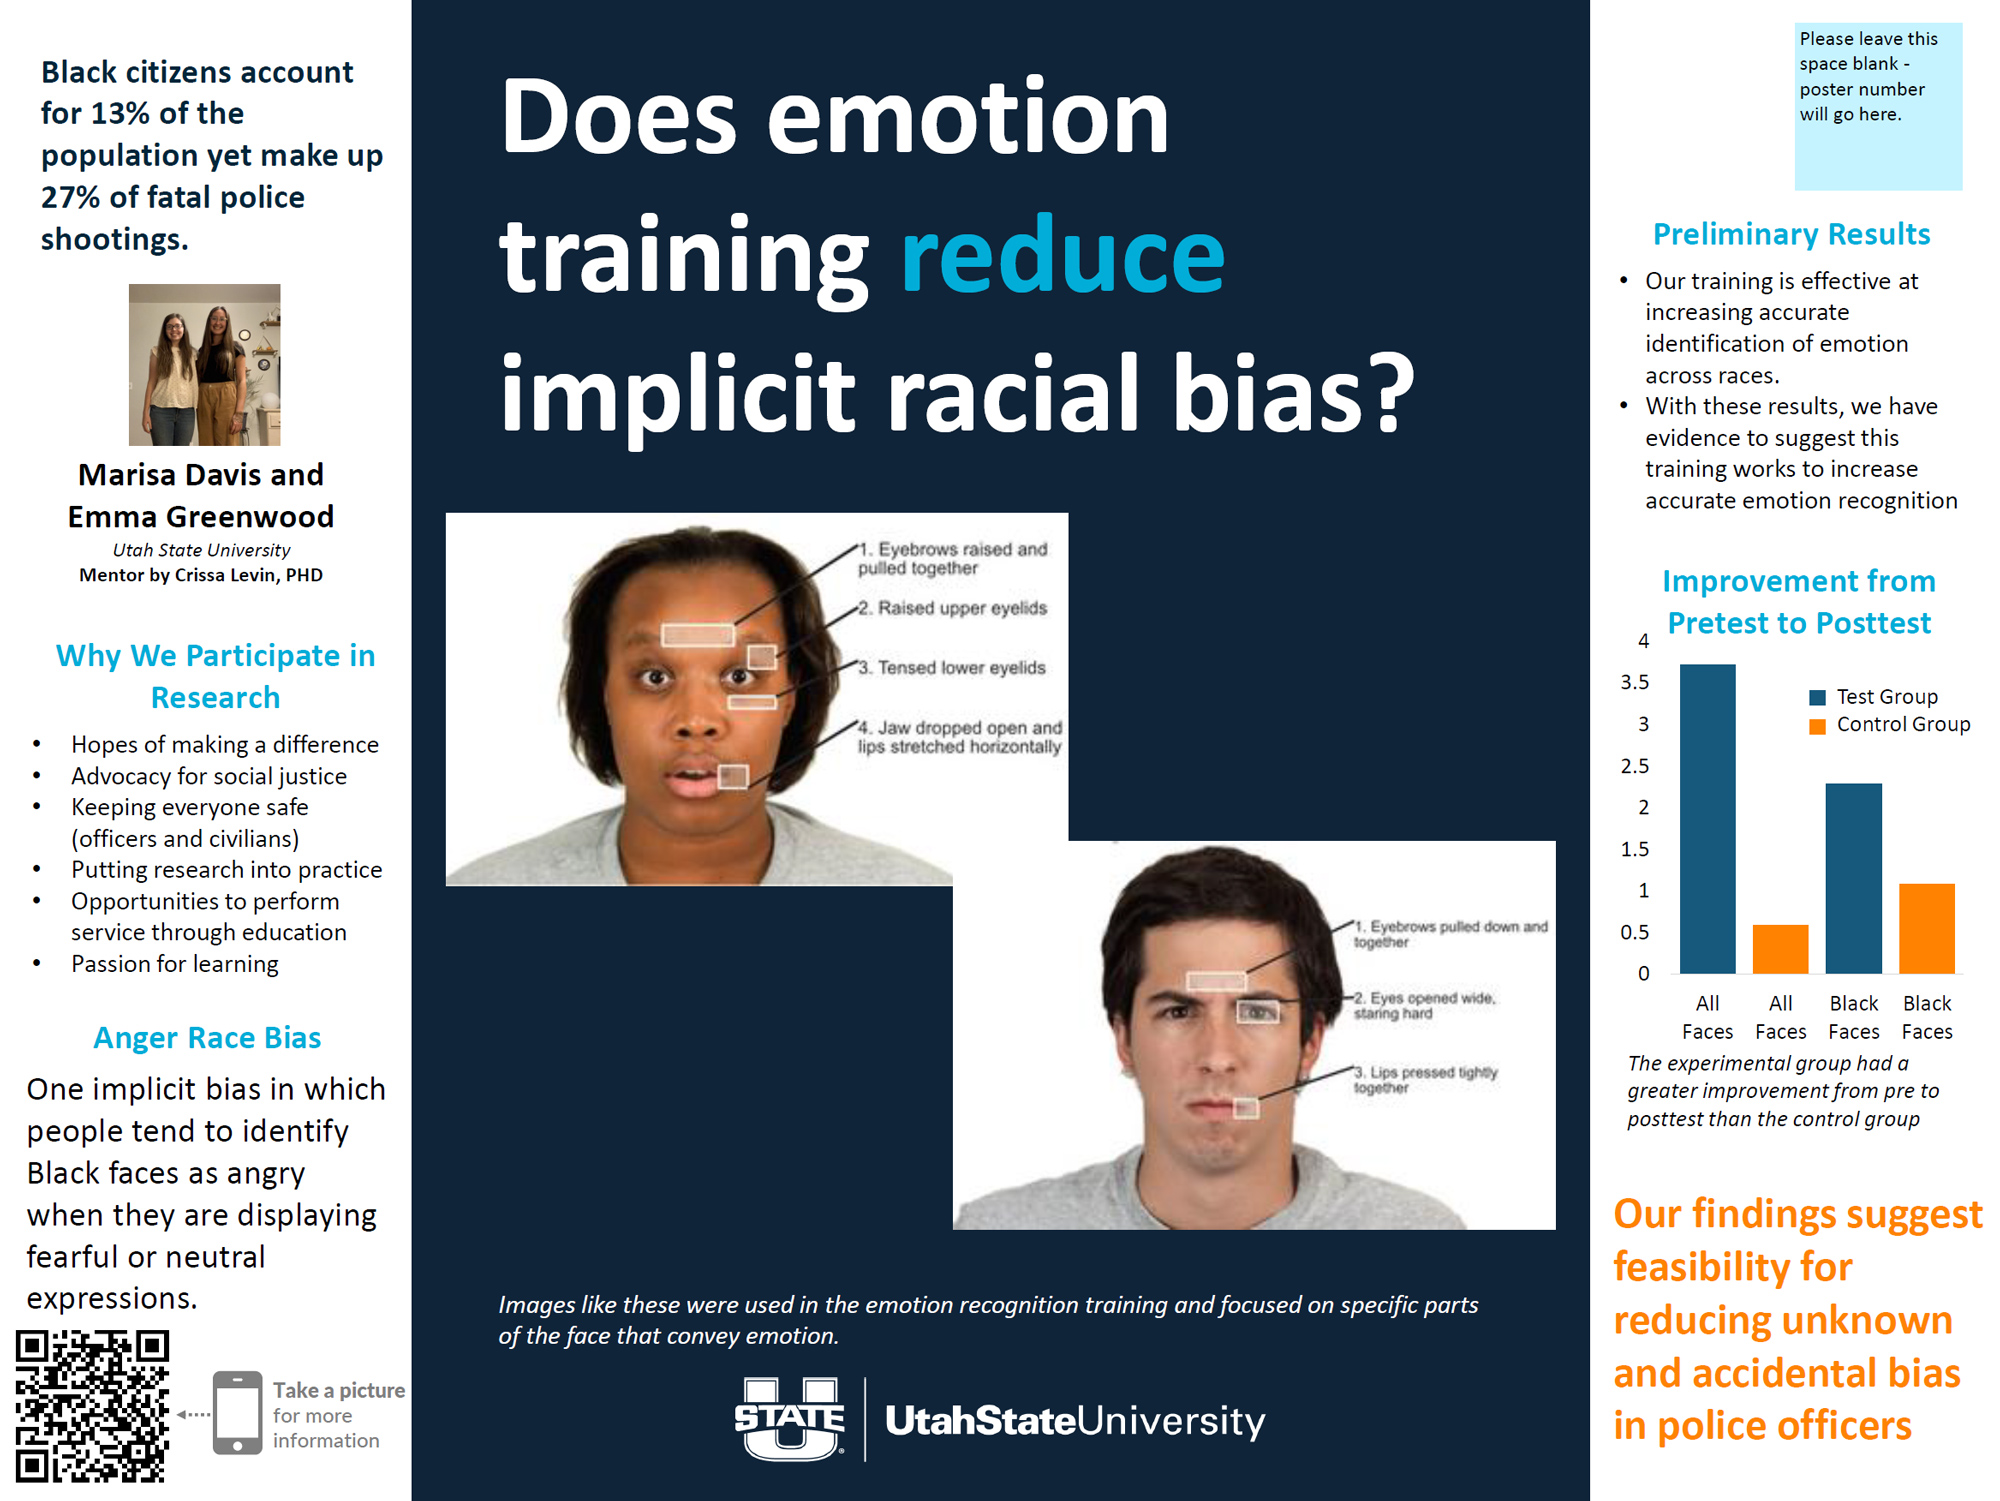 Does emotion training reduce implicit racial bias?